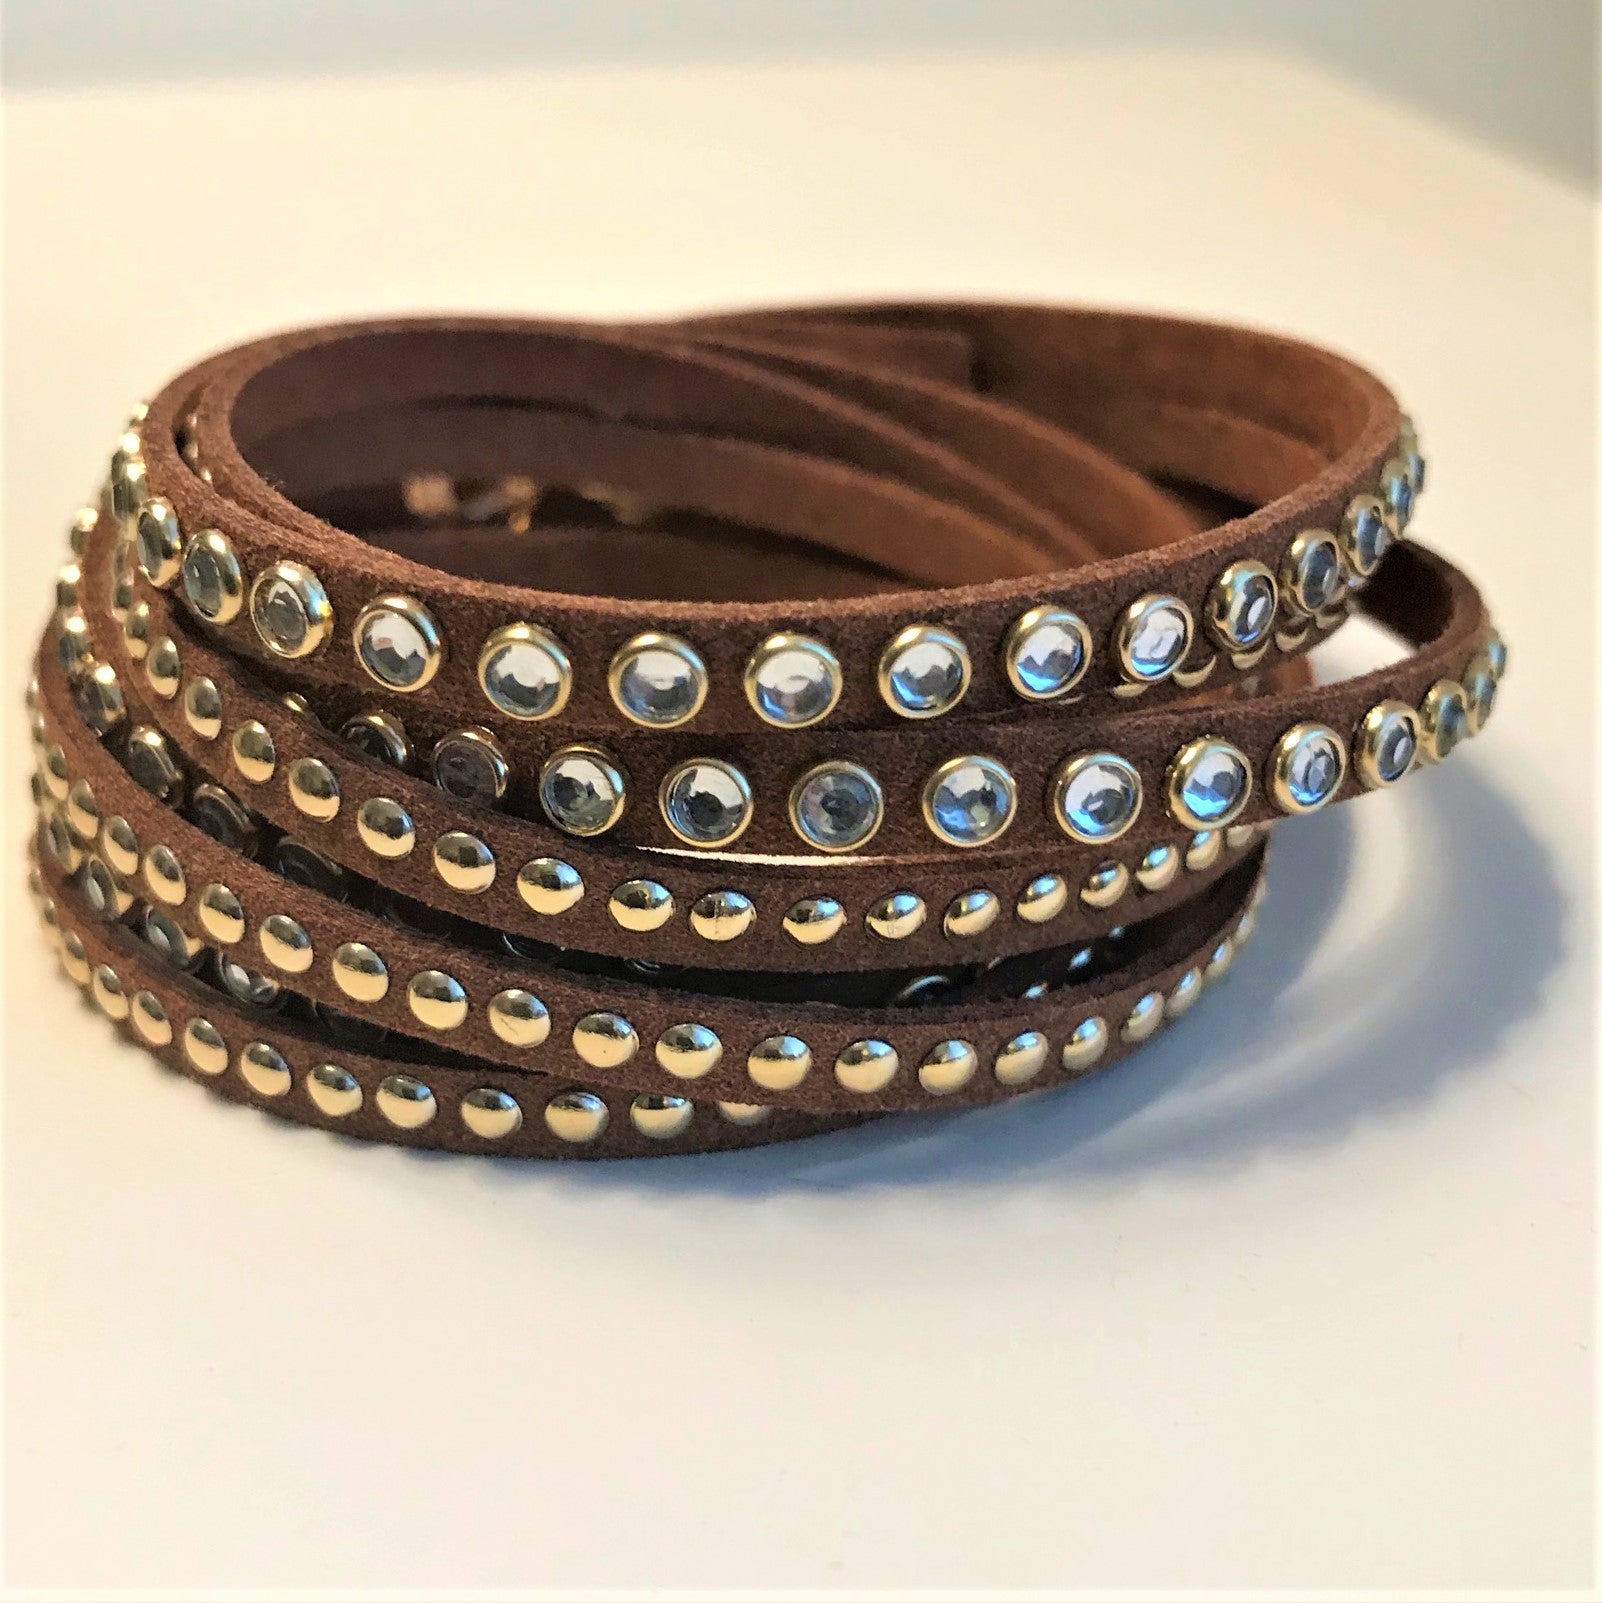 Accessories | Suede leather wrap bracelet